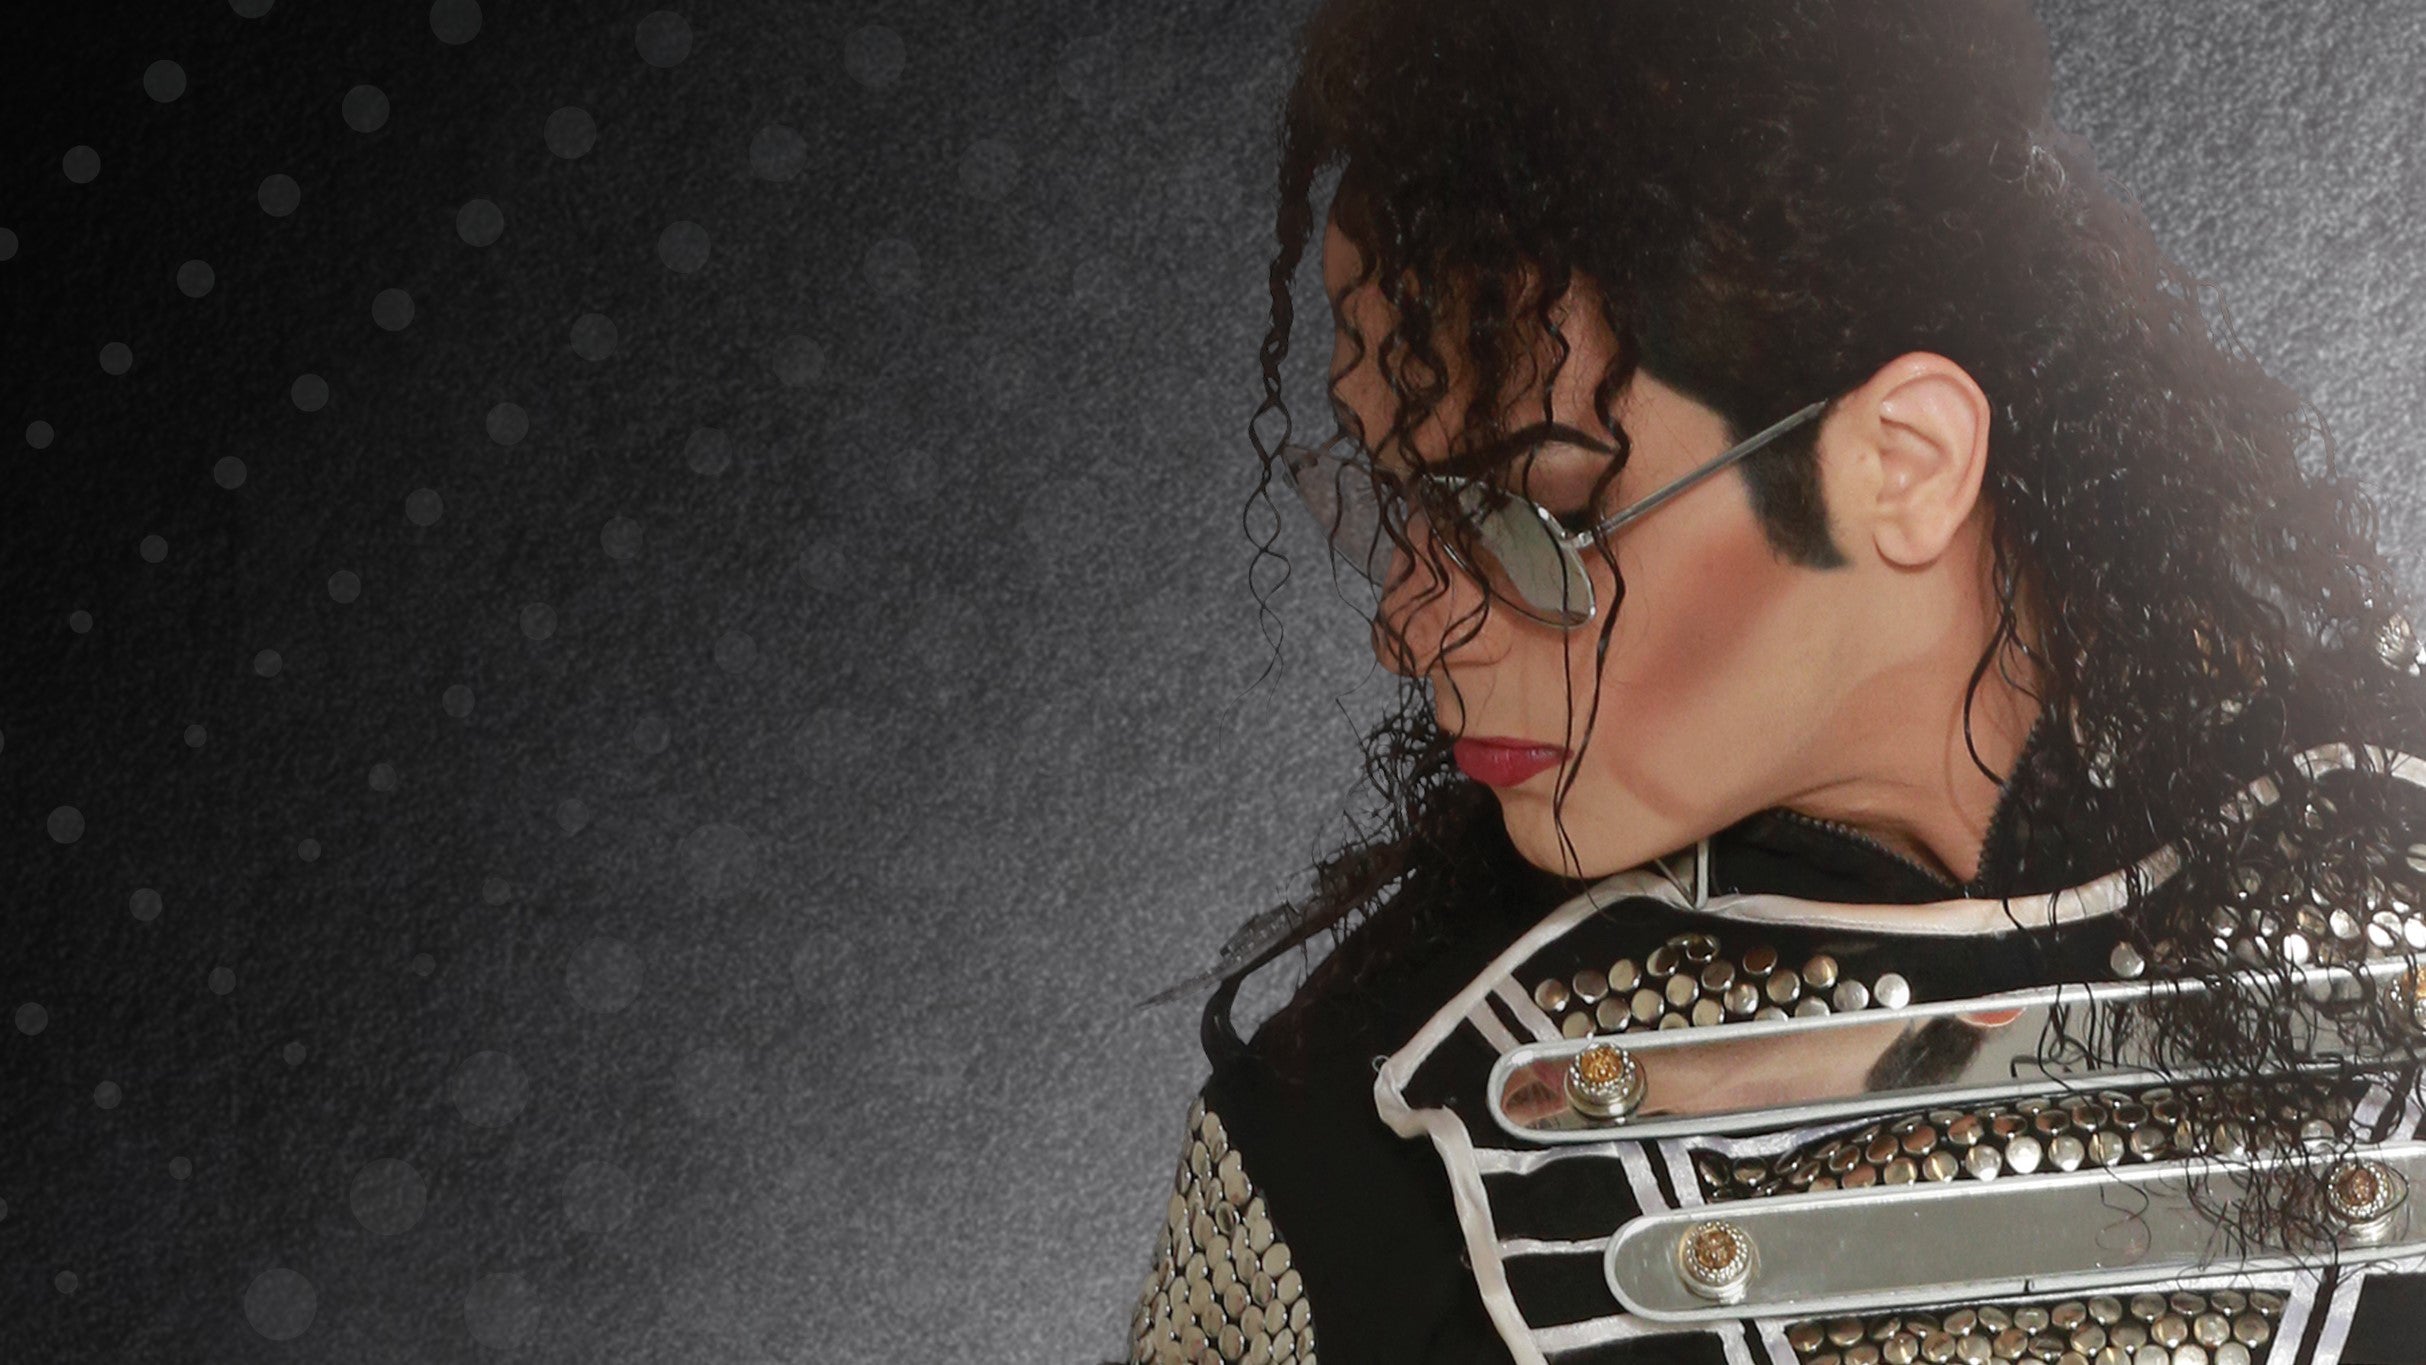 MJ LIVE - Michael Jackson Tribute in Temecula promo photo for Artist presale offer code